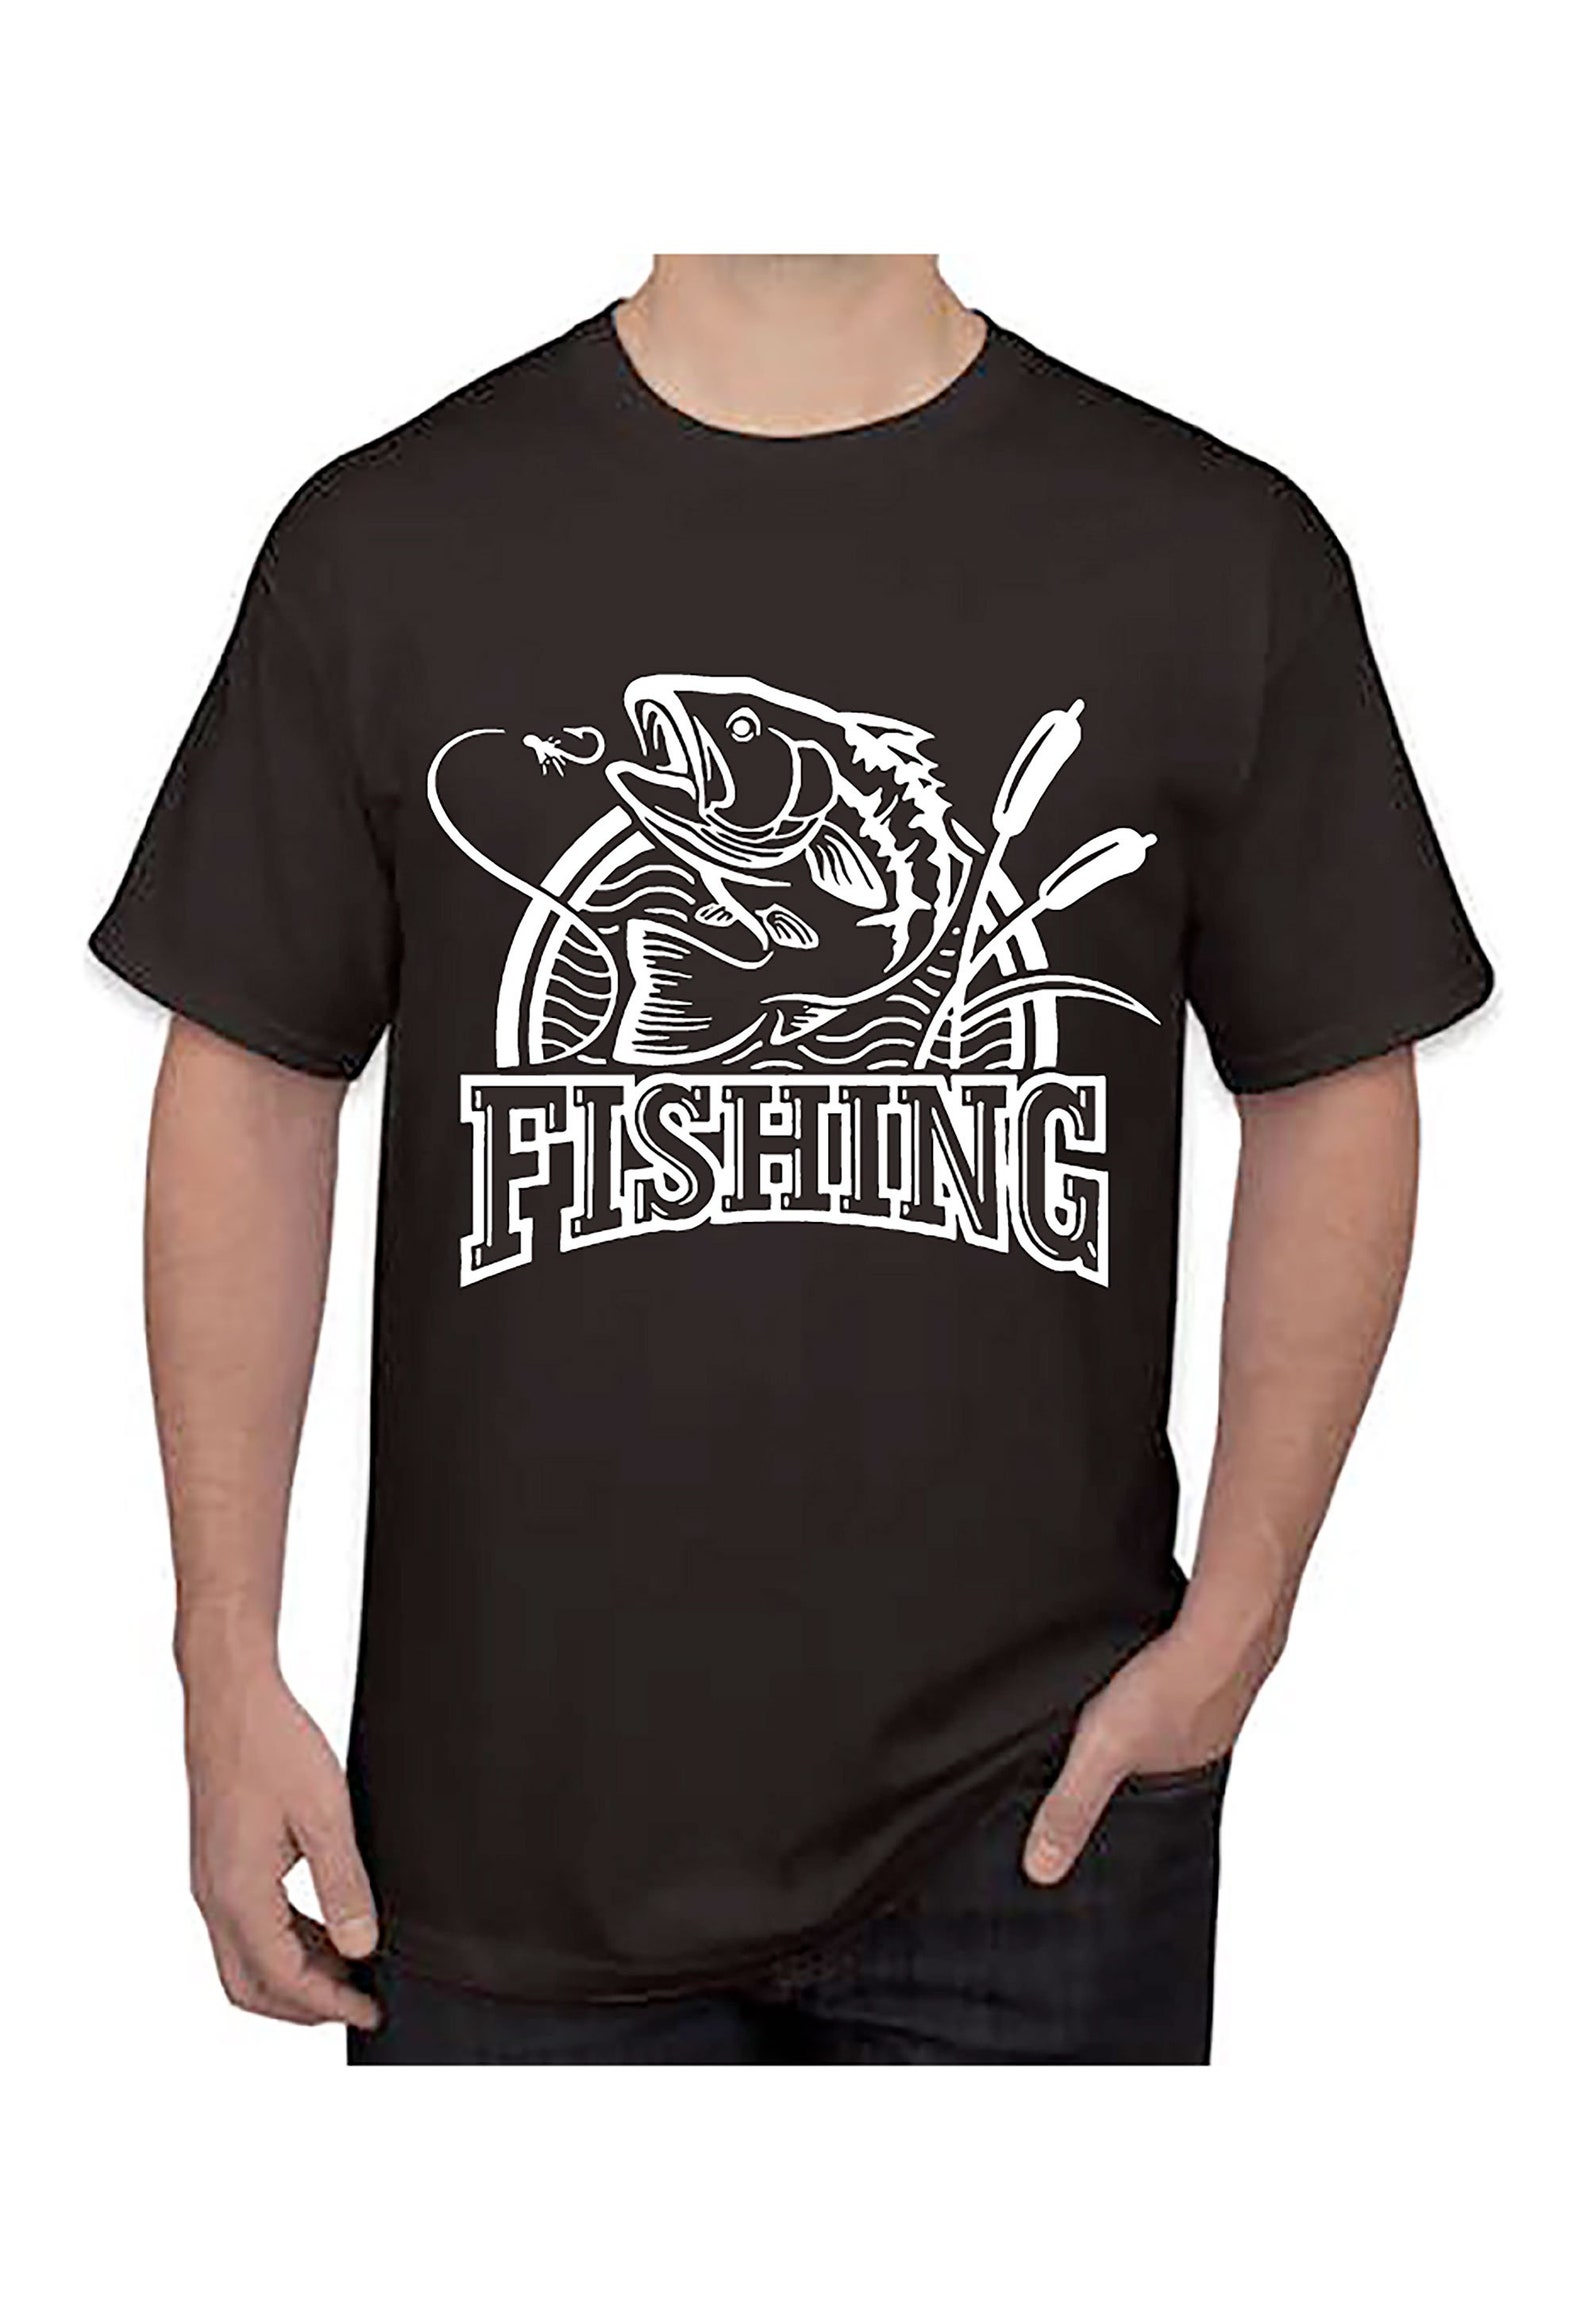 Graphic Fishing T-shirt Tee Shirt Top High Quality print | Etsy